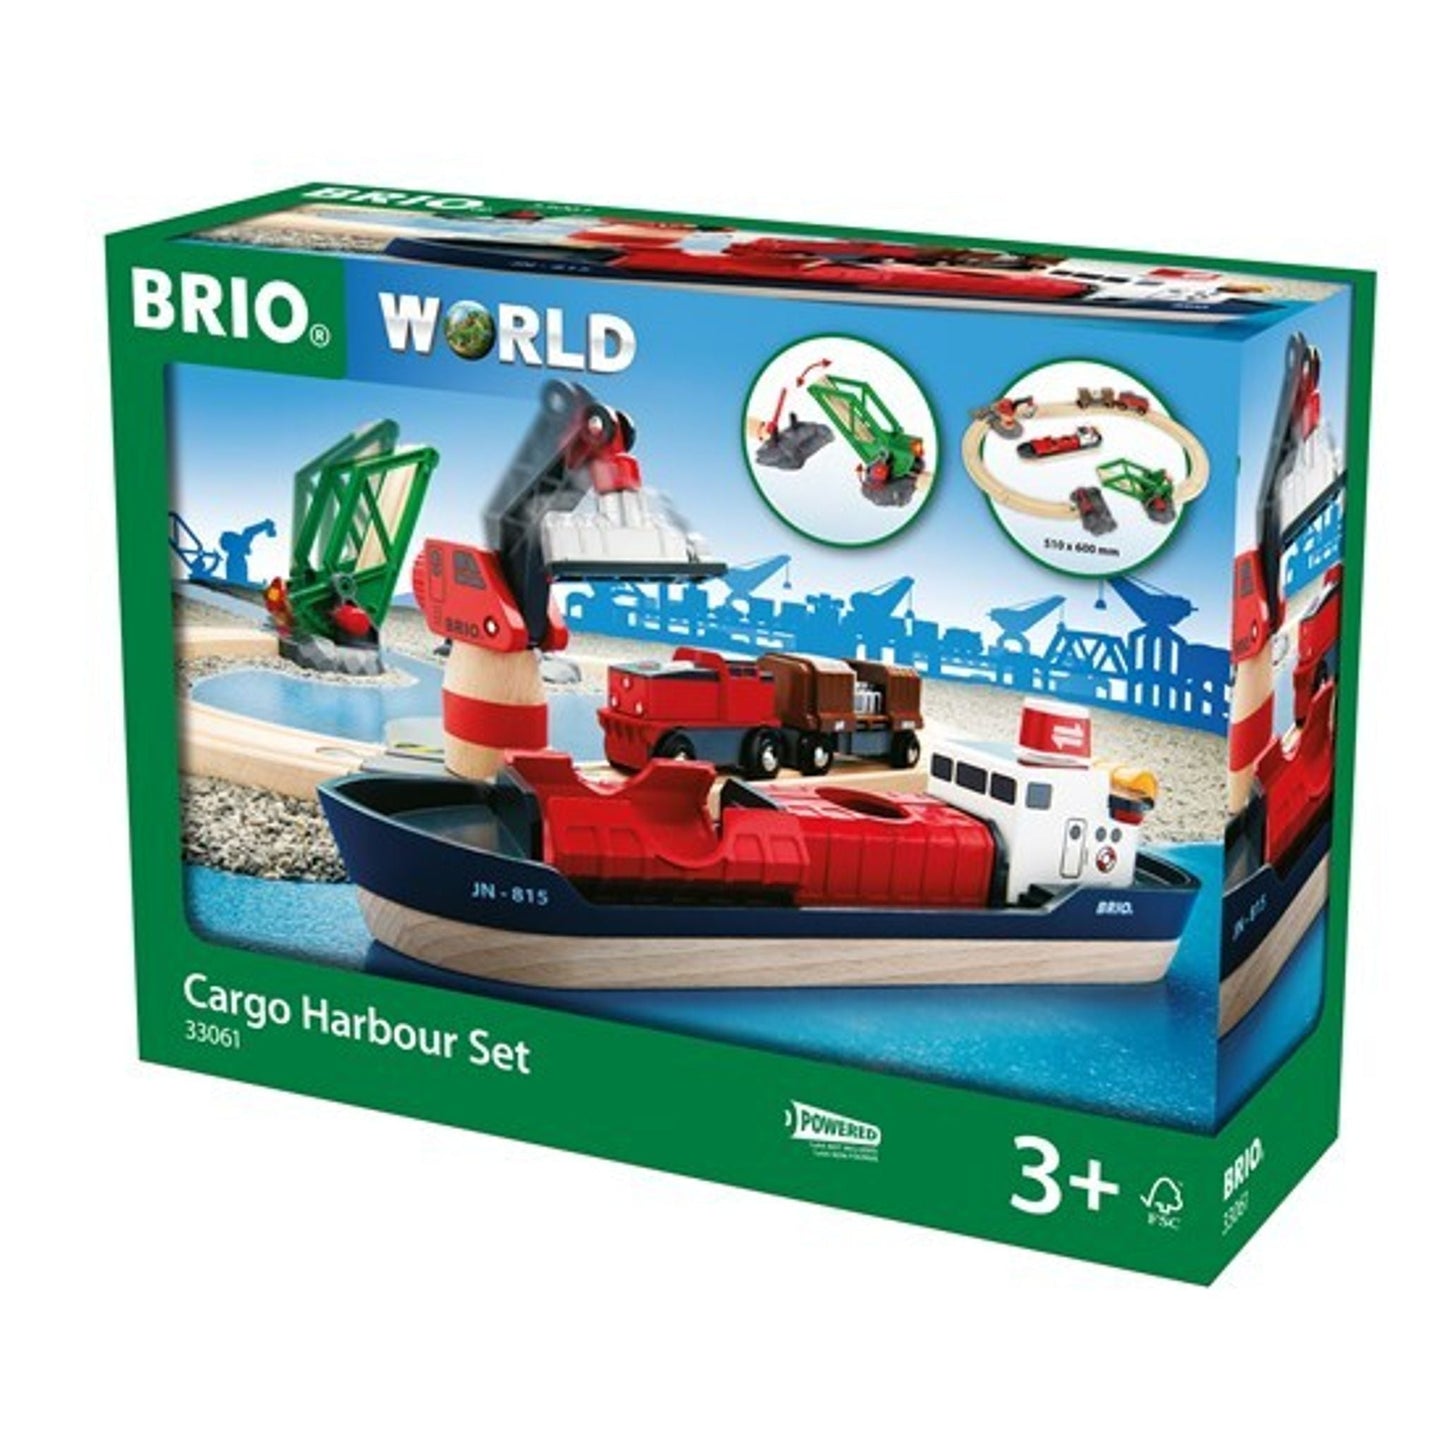 BRIO Set - Cargo Harbour Set 16 pieces - Toybox Tales